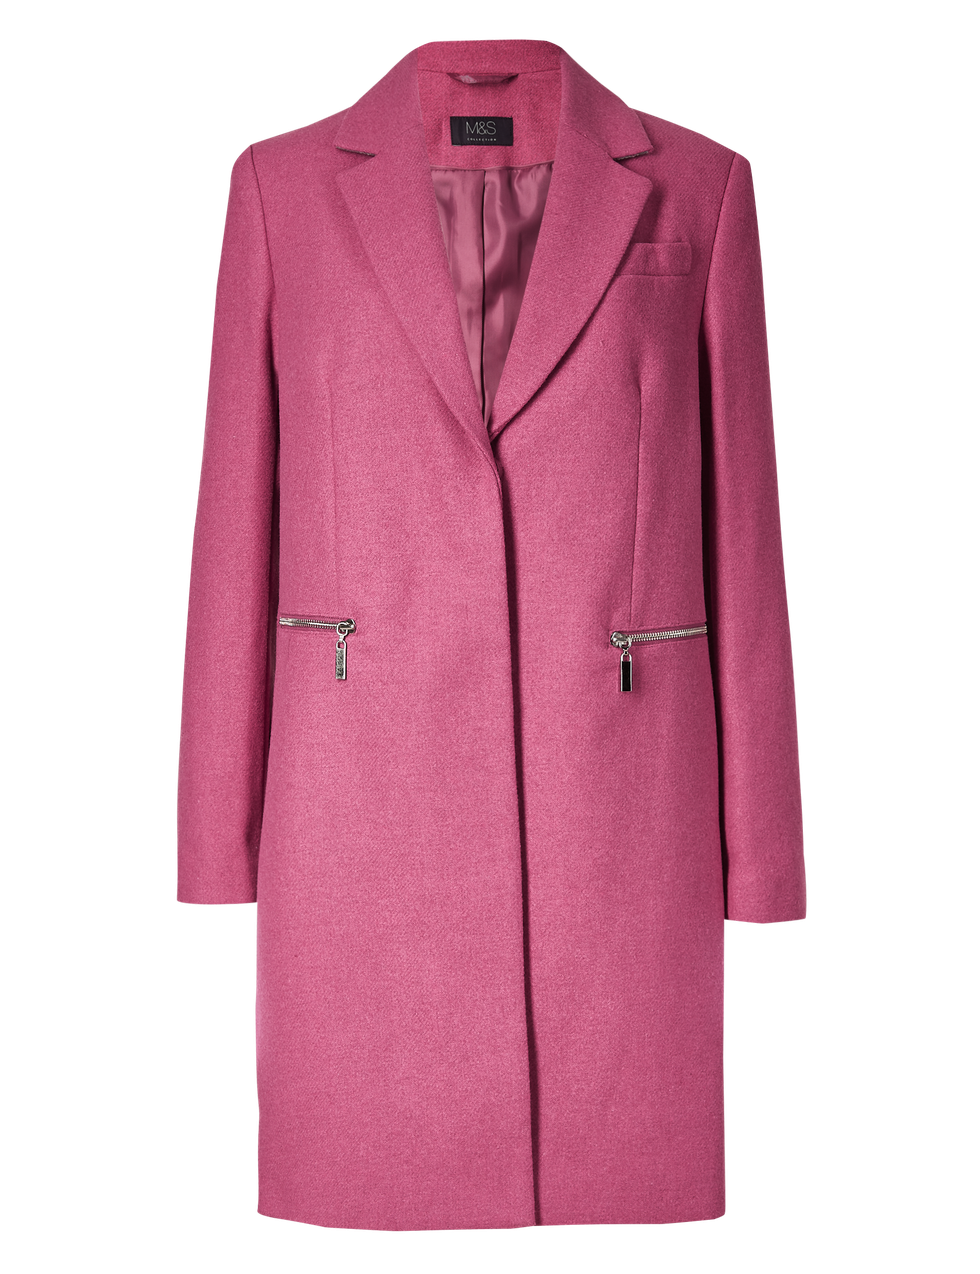 Clothing, Coat, Outerwear, Overcoat, Pink, Magenta, Sleeve, Trench coat, Jacket, Collar, 